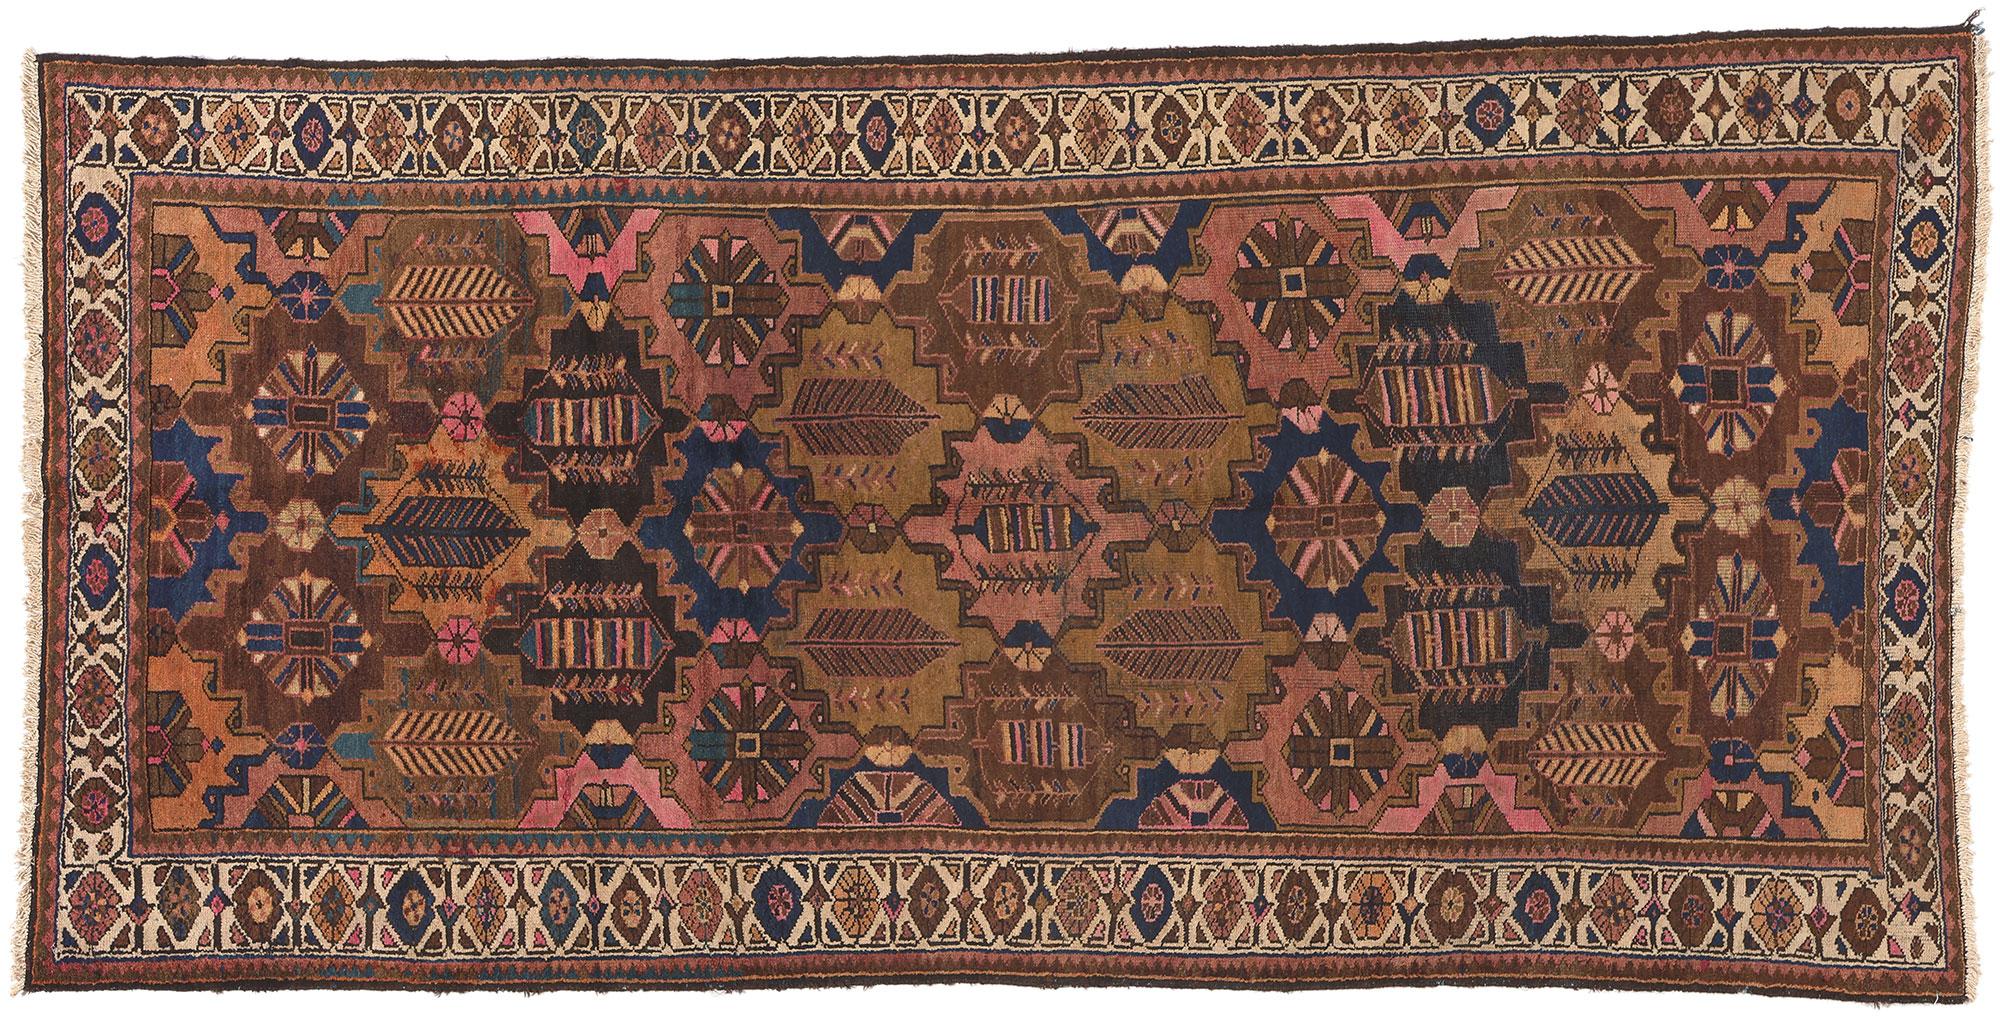 Wool Antique Persian Bakhtiari Rug with Four Seasons Garden Design For Sale